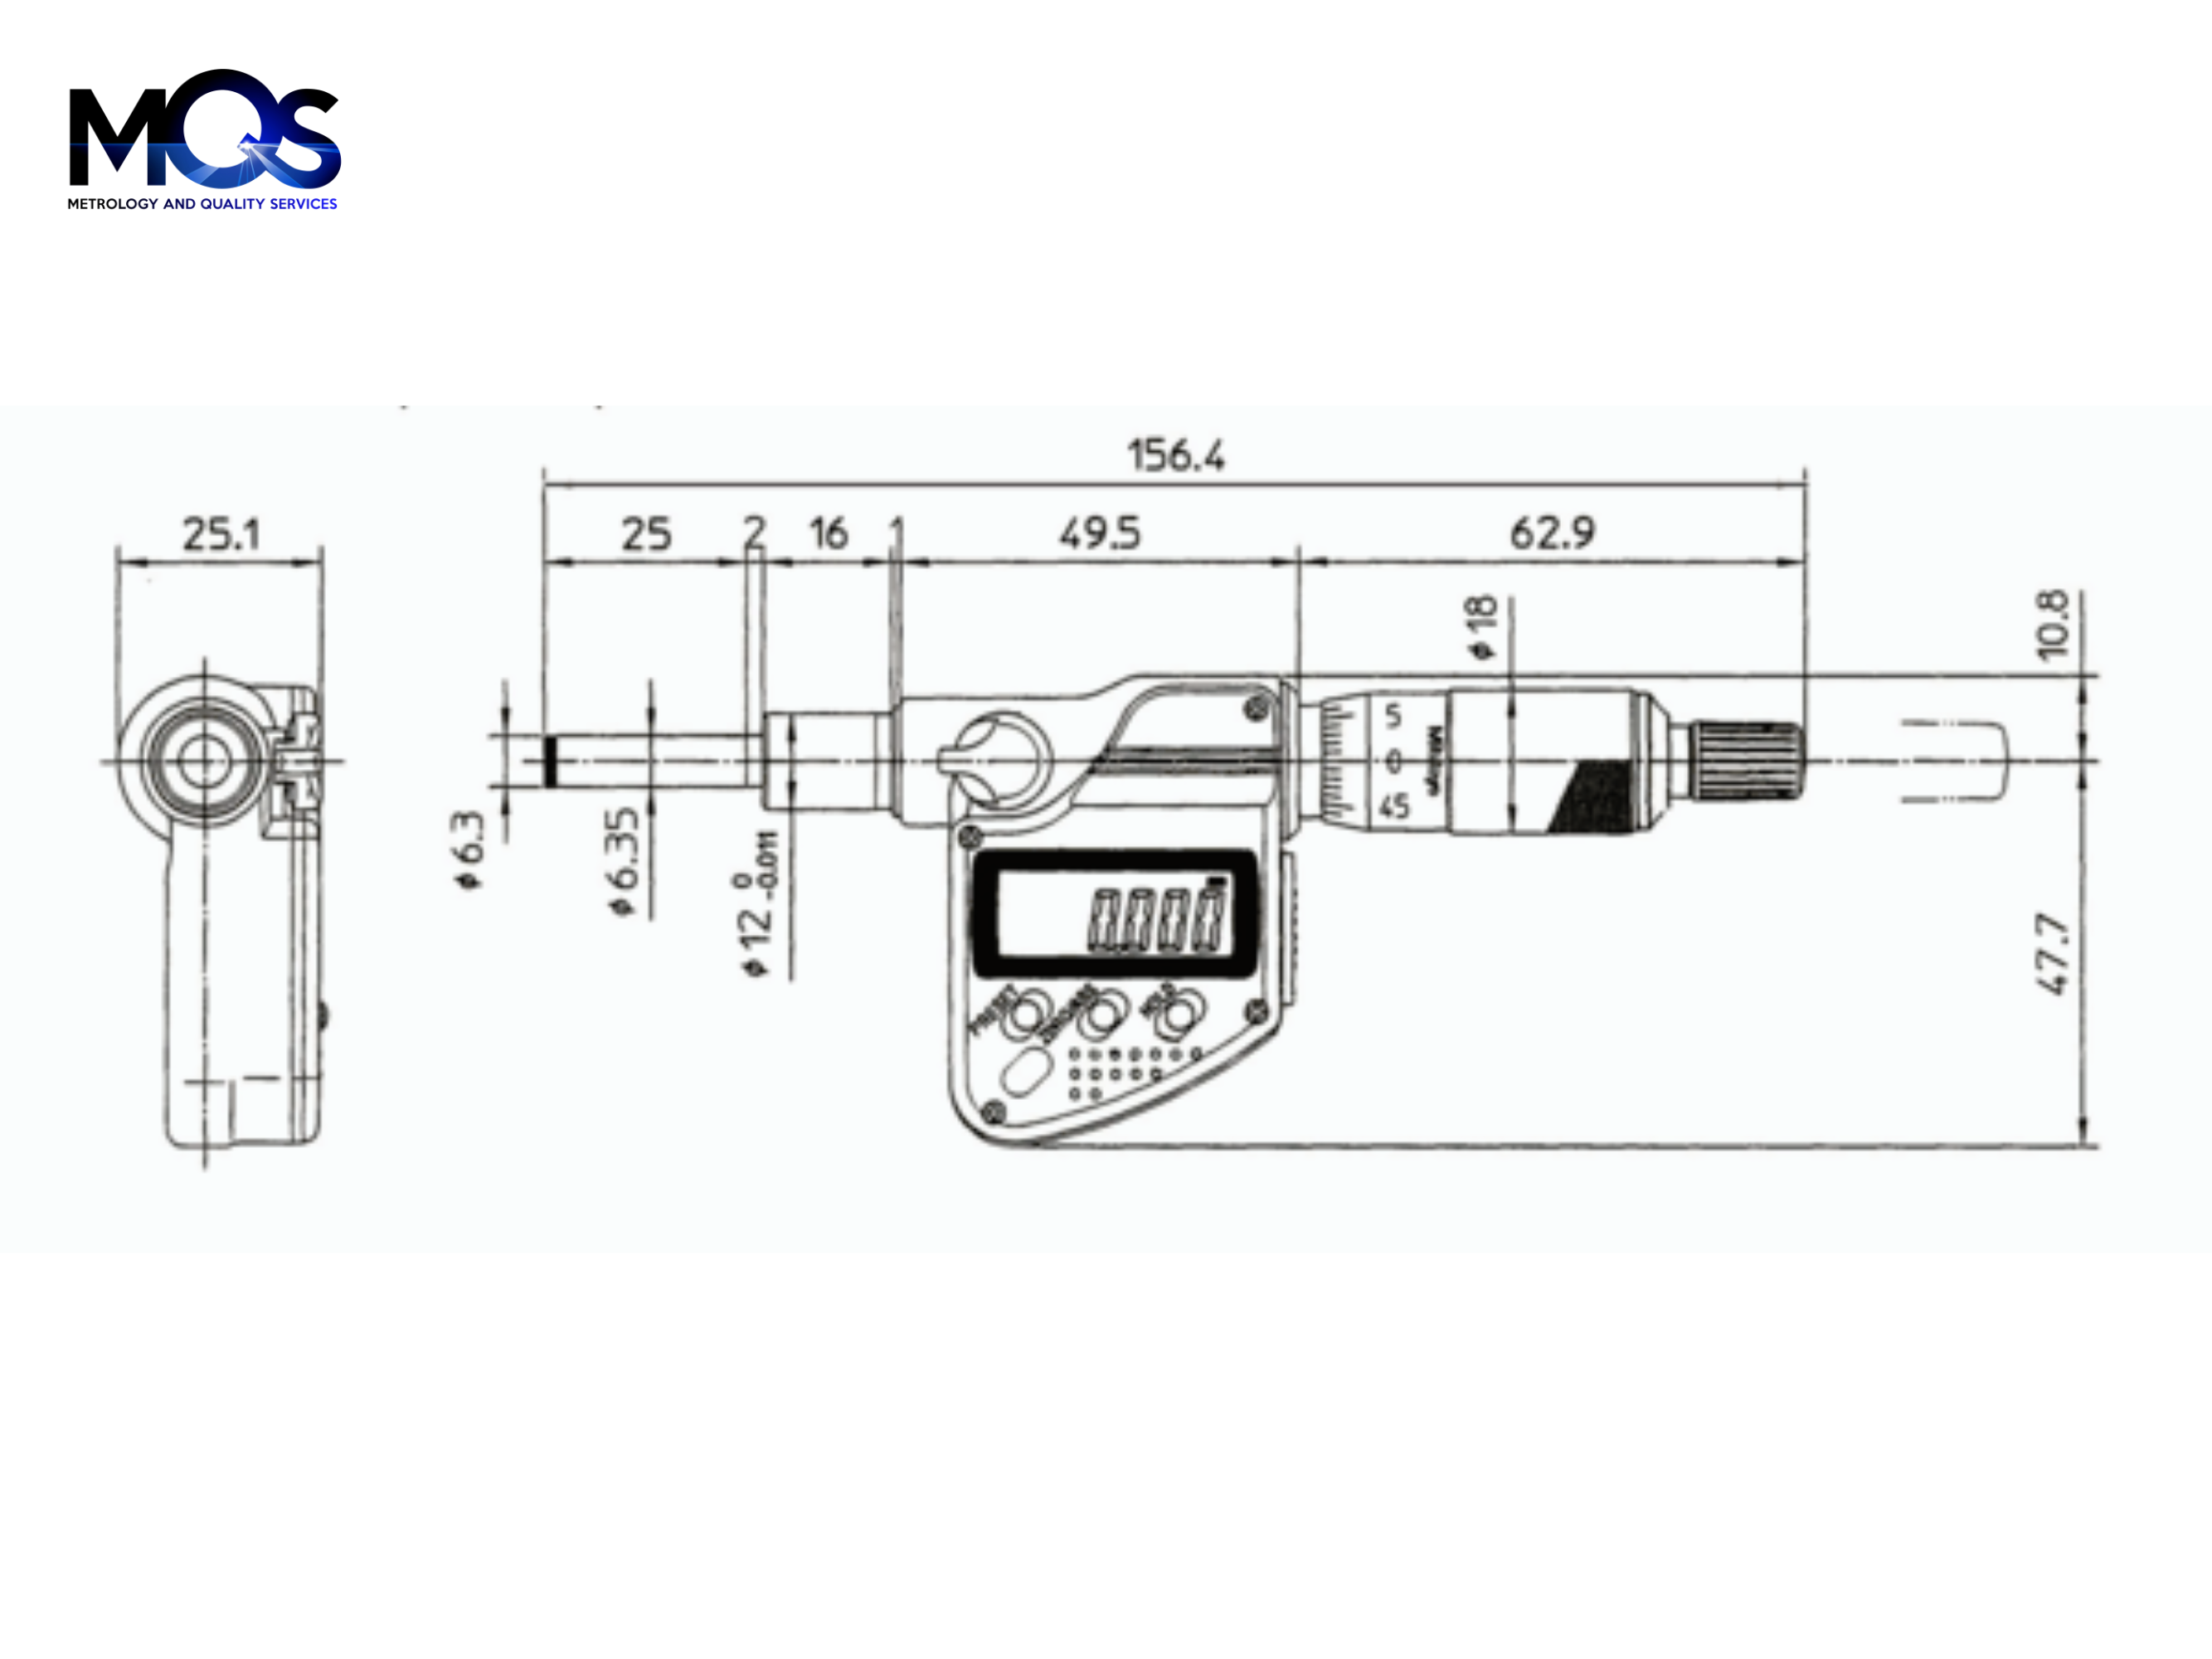 Digital Micrometer Head 0-25mm, Flat Spindle, 12/18mm Plain Stem 350-271-30